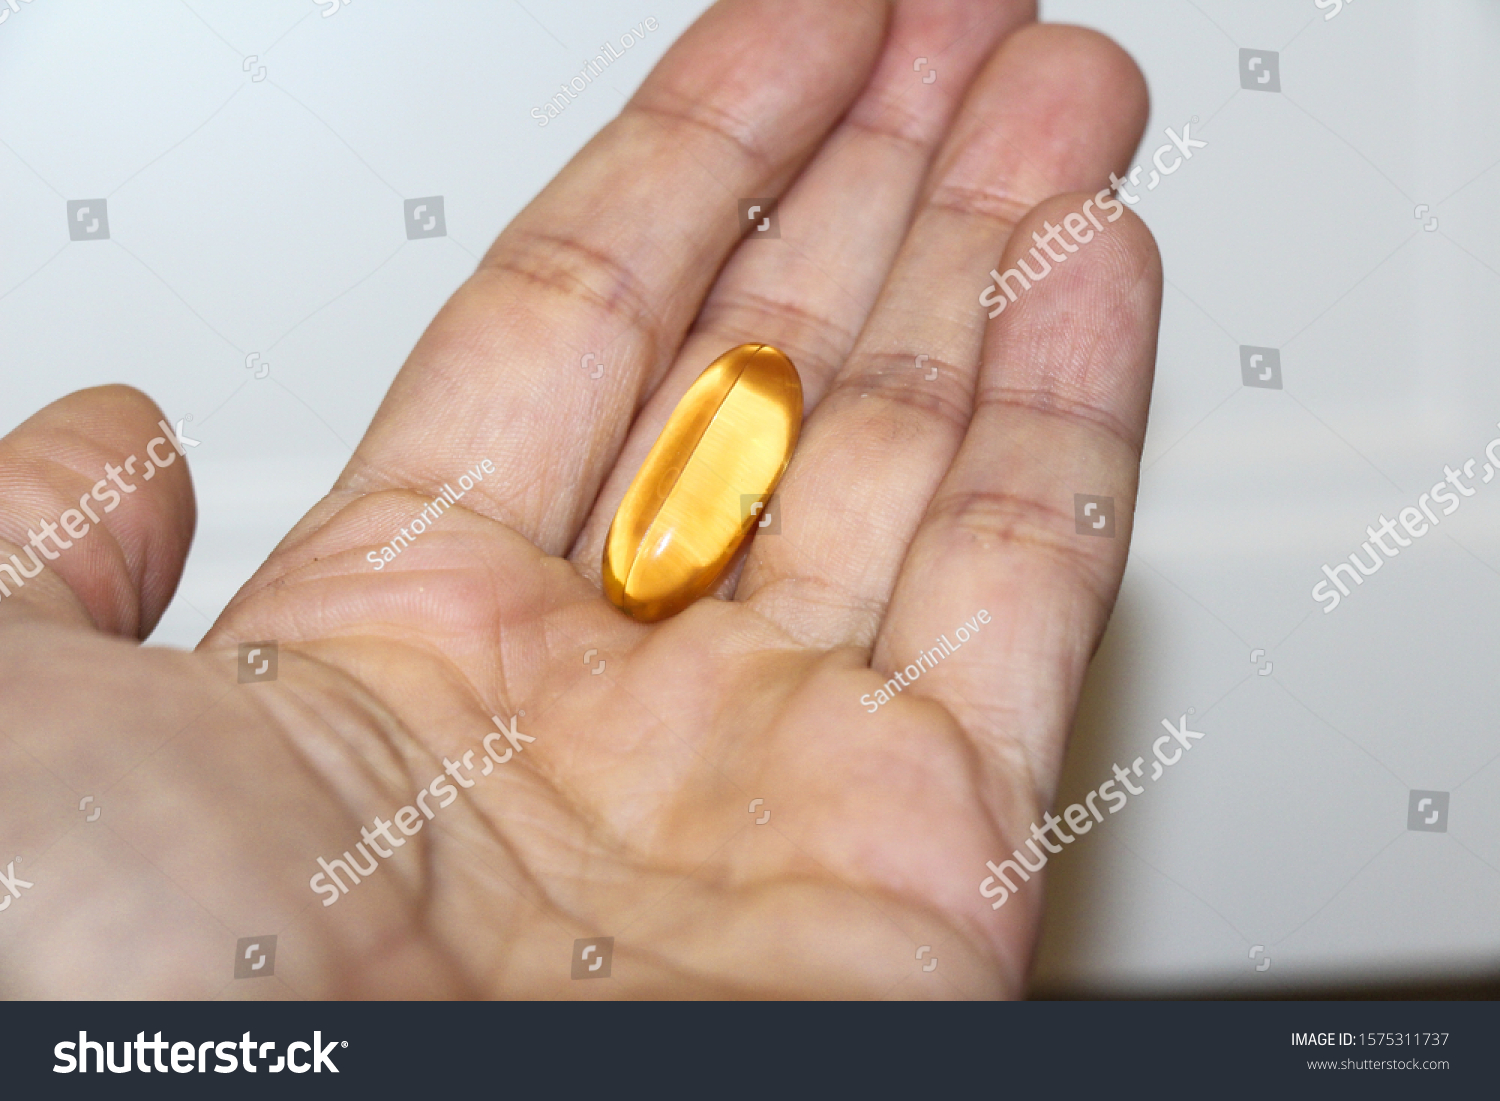 Realistic yellow gelatin capsule with omega 3. Omega-3 fish oil capsules #1575311737